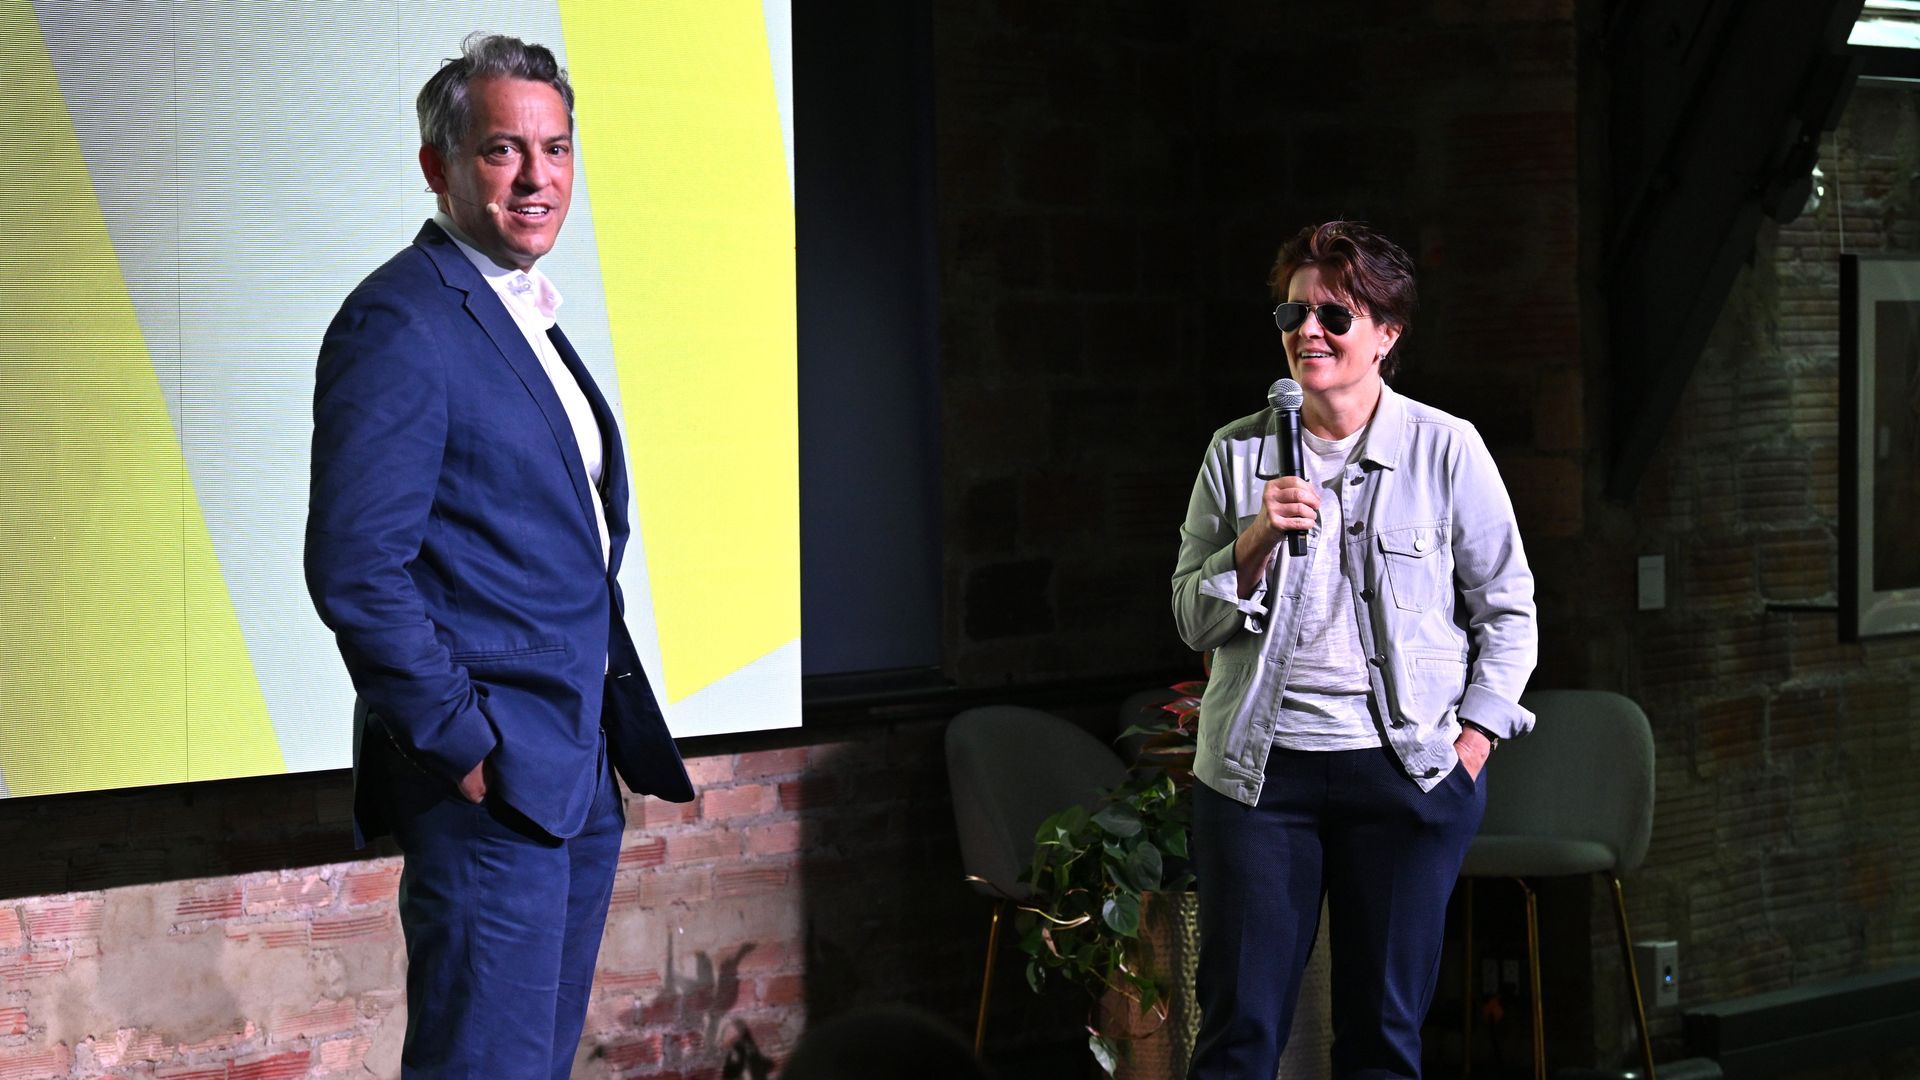 Vox Media CEO Jim Bankoff and journalist Kara Swisher at Vox Media's upfront on June 9, 2022 in New York.